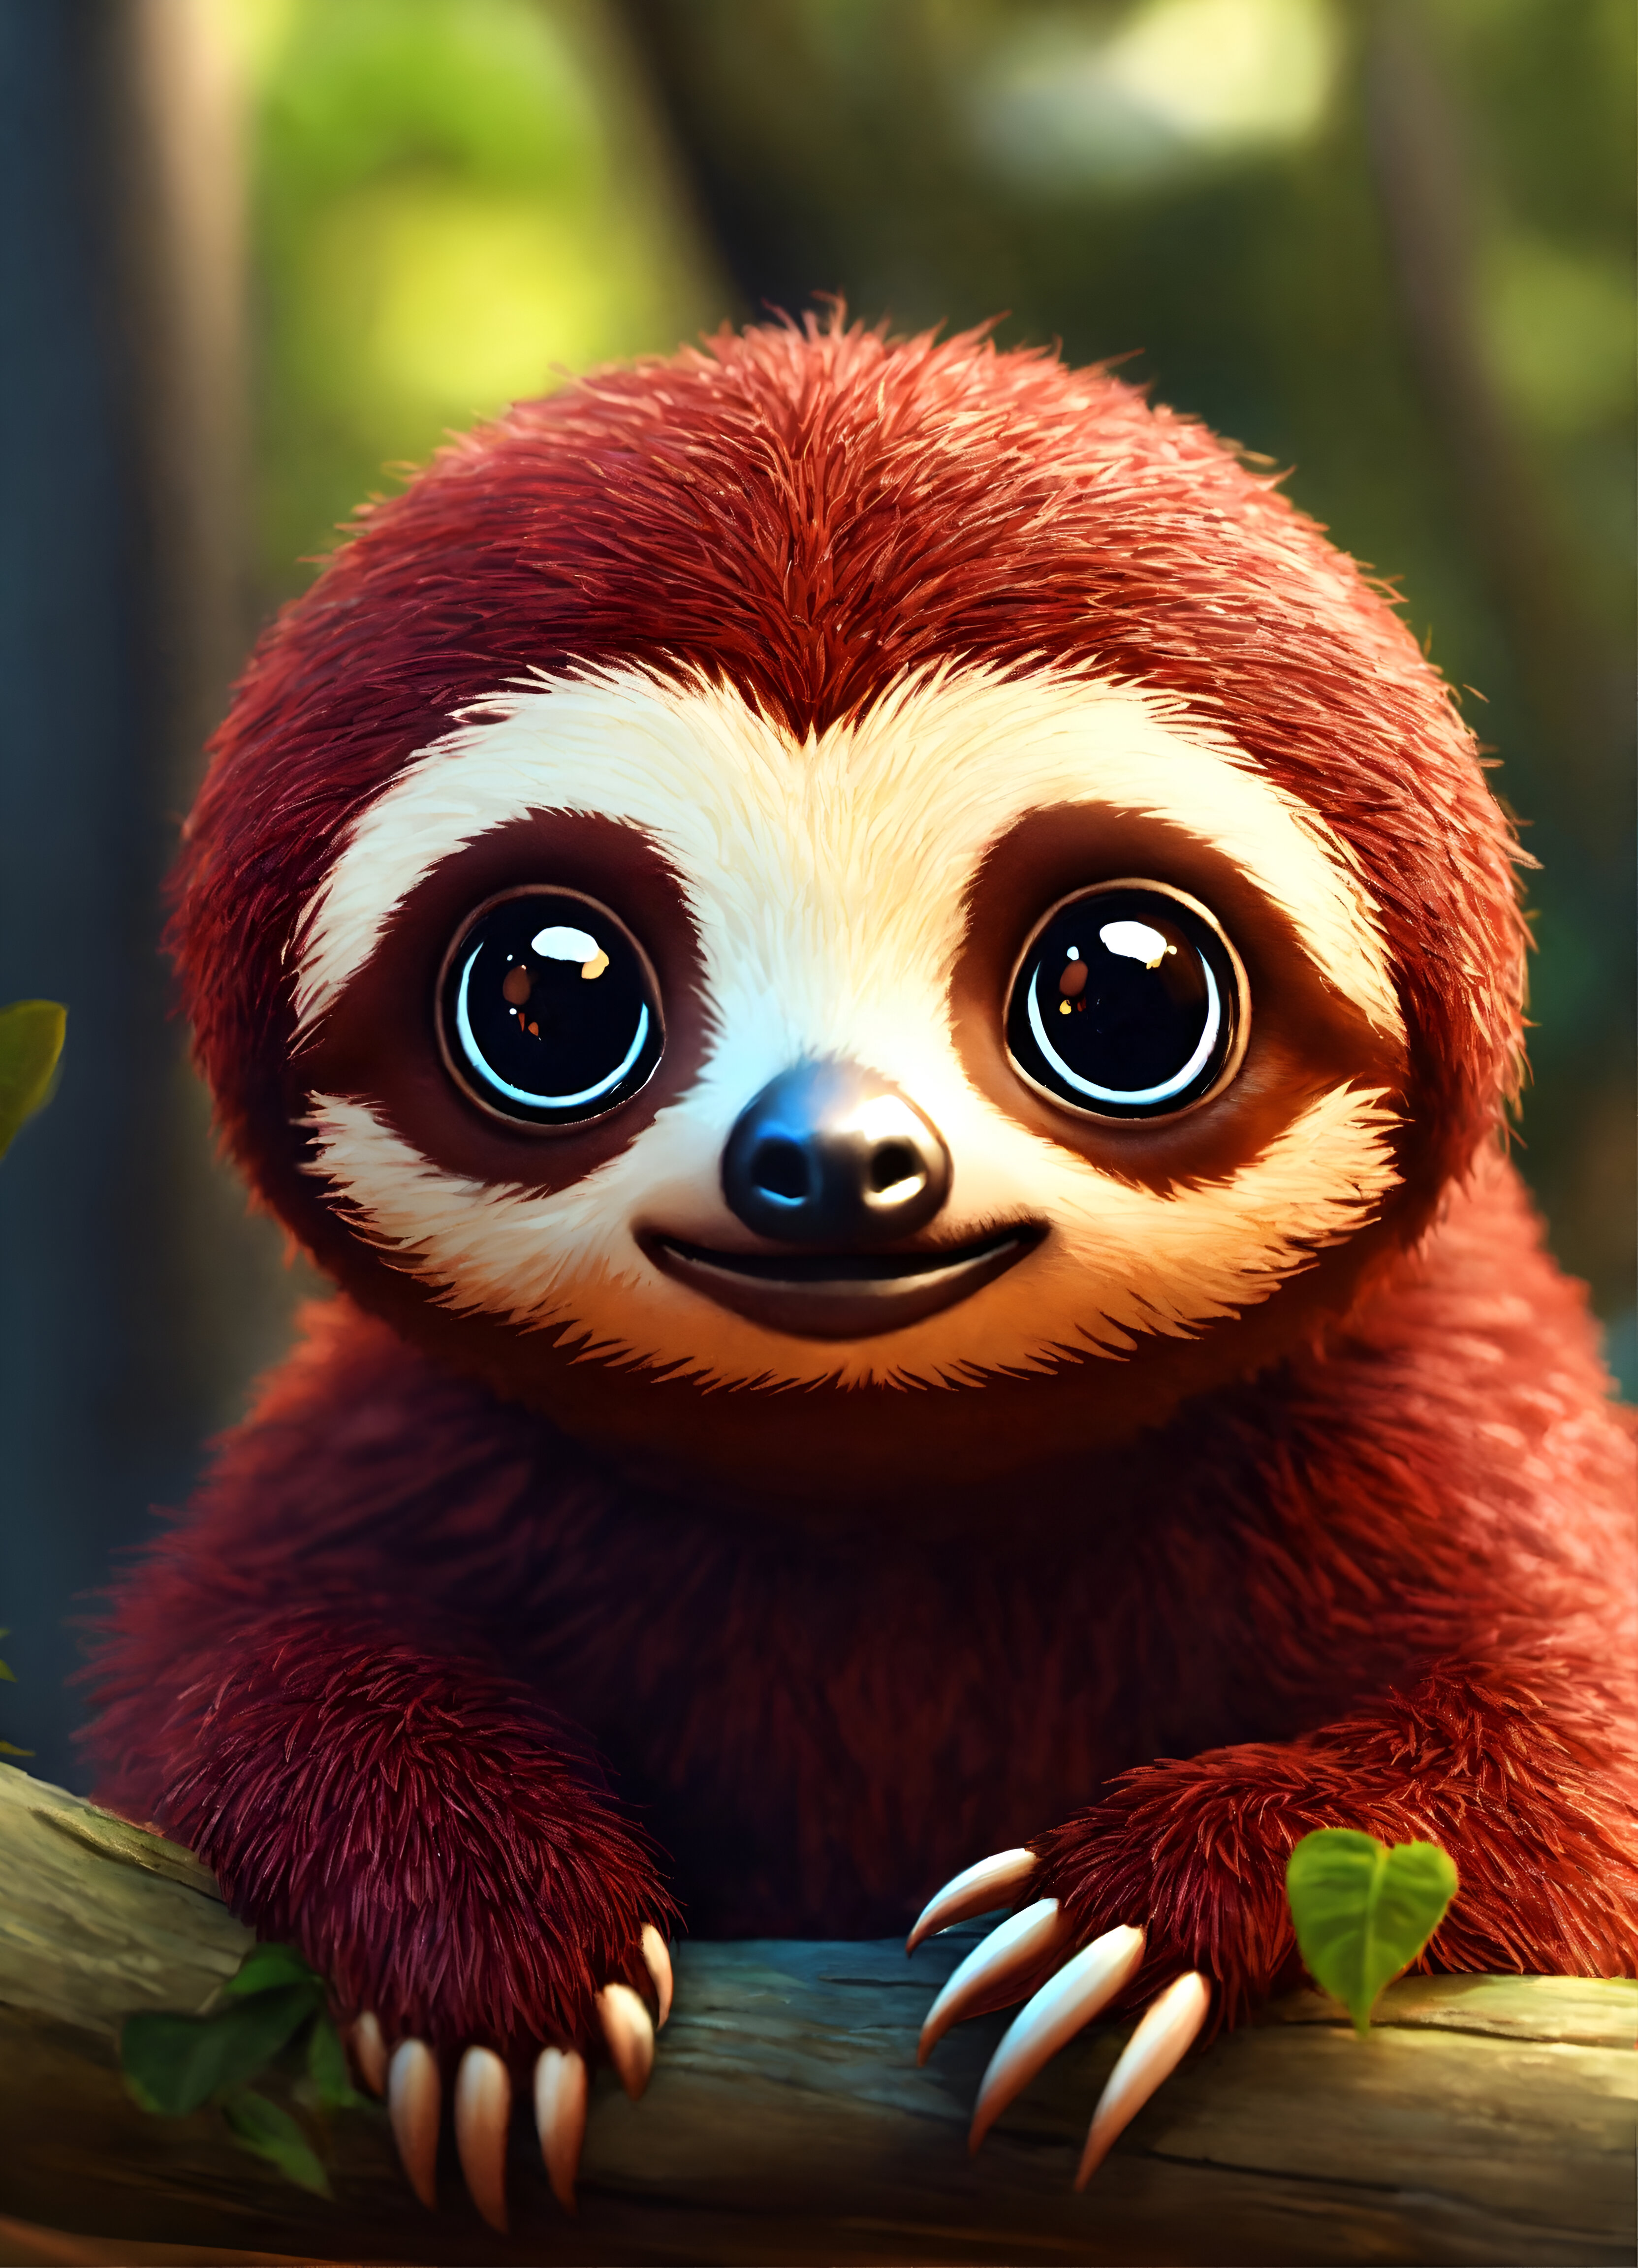 Cute Baby Sloth